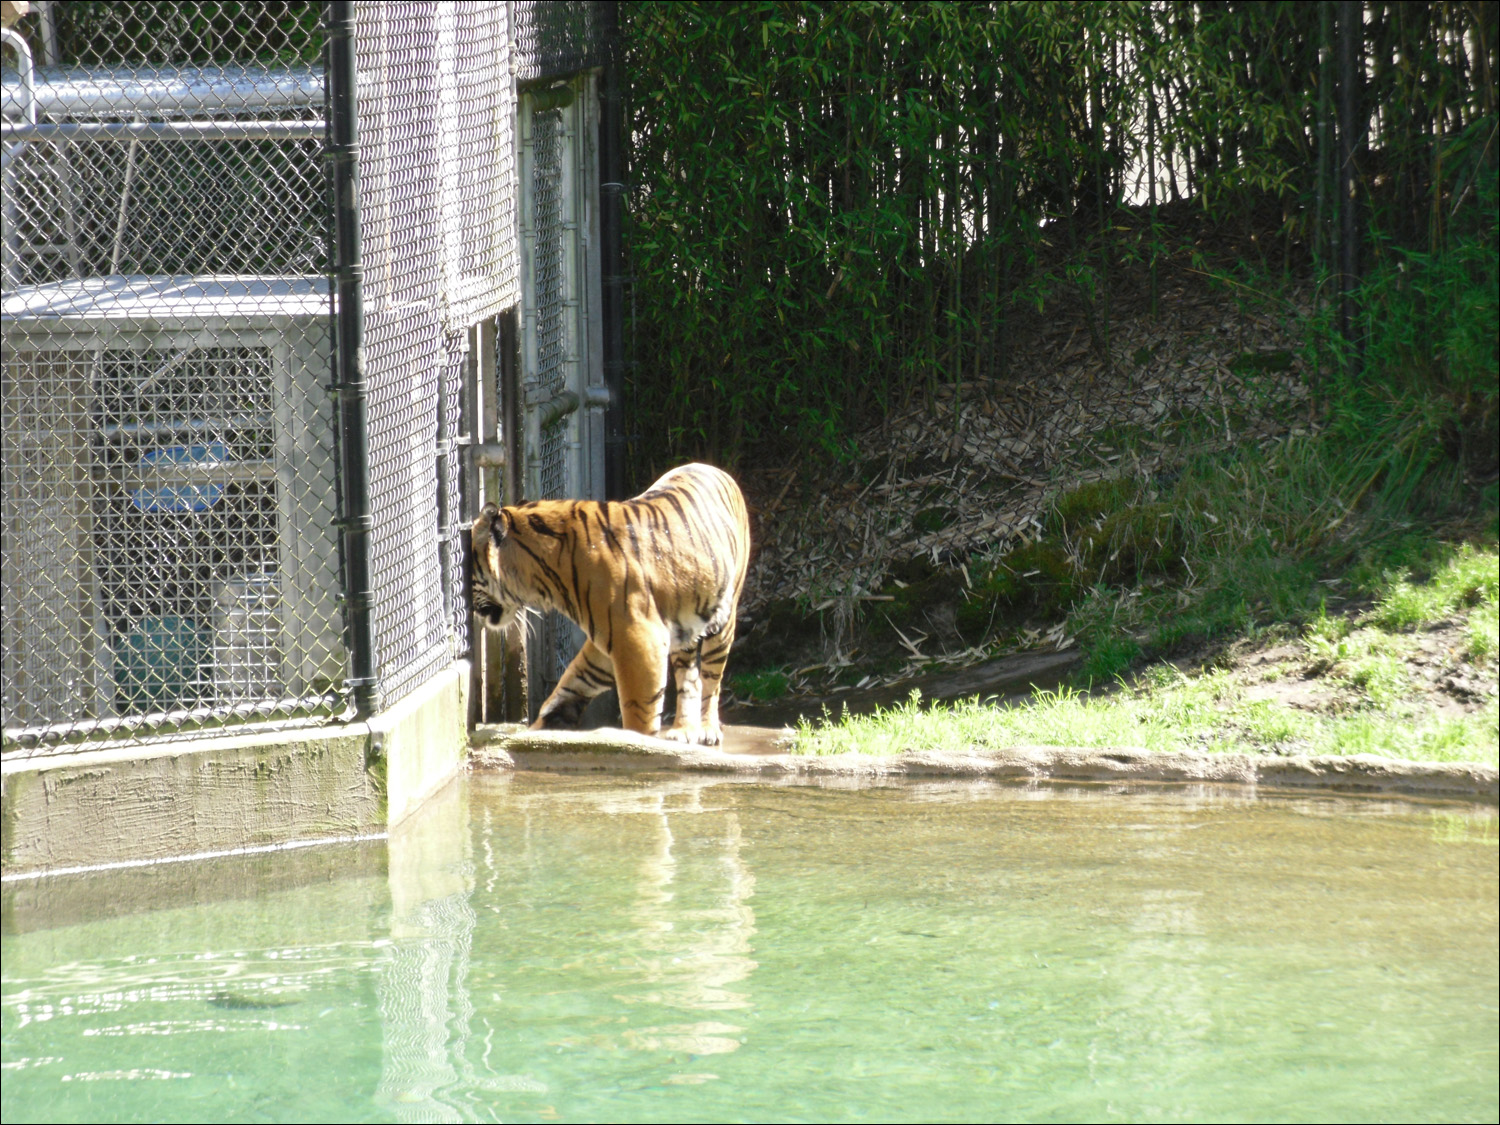 Tacoma, WA-Point Defiance Zoo & Aquarium-Sumatran tiger "daddy"